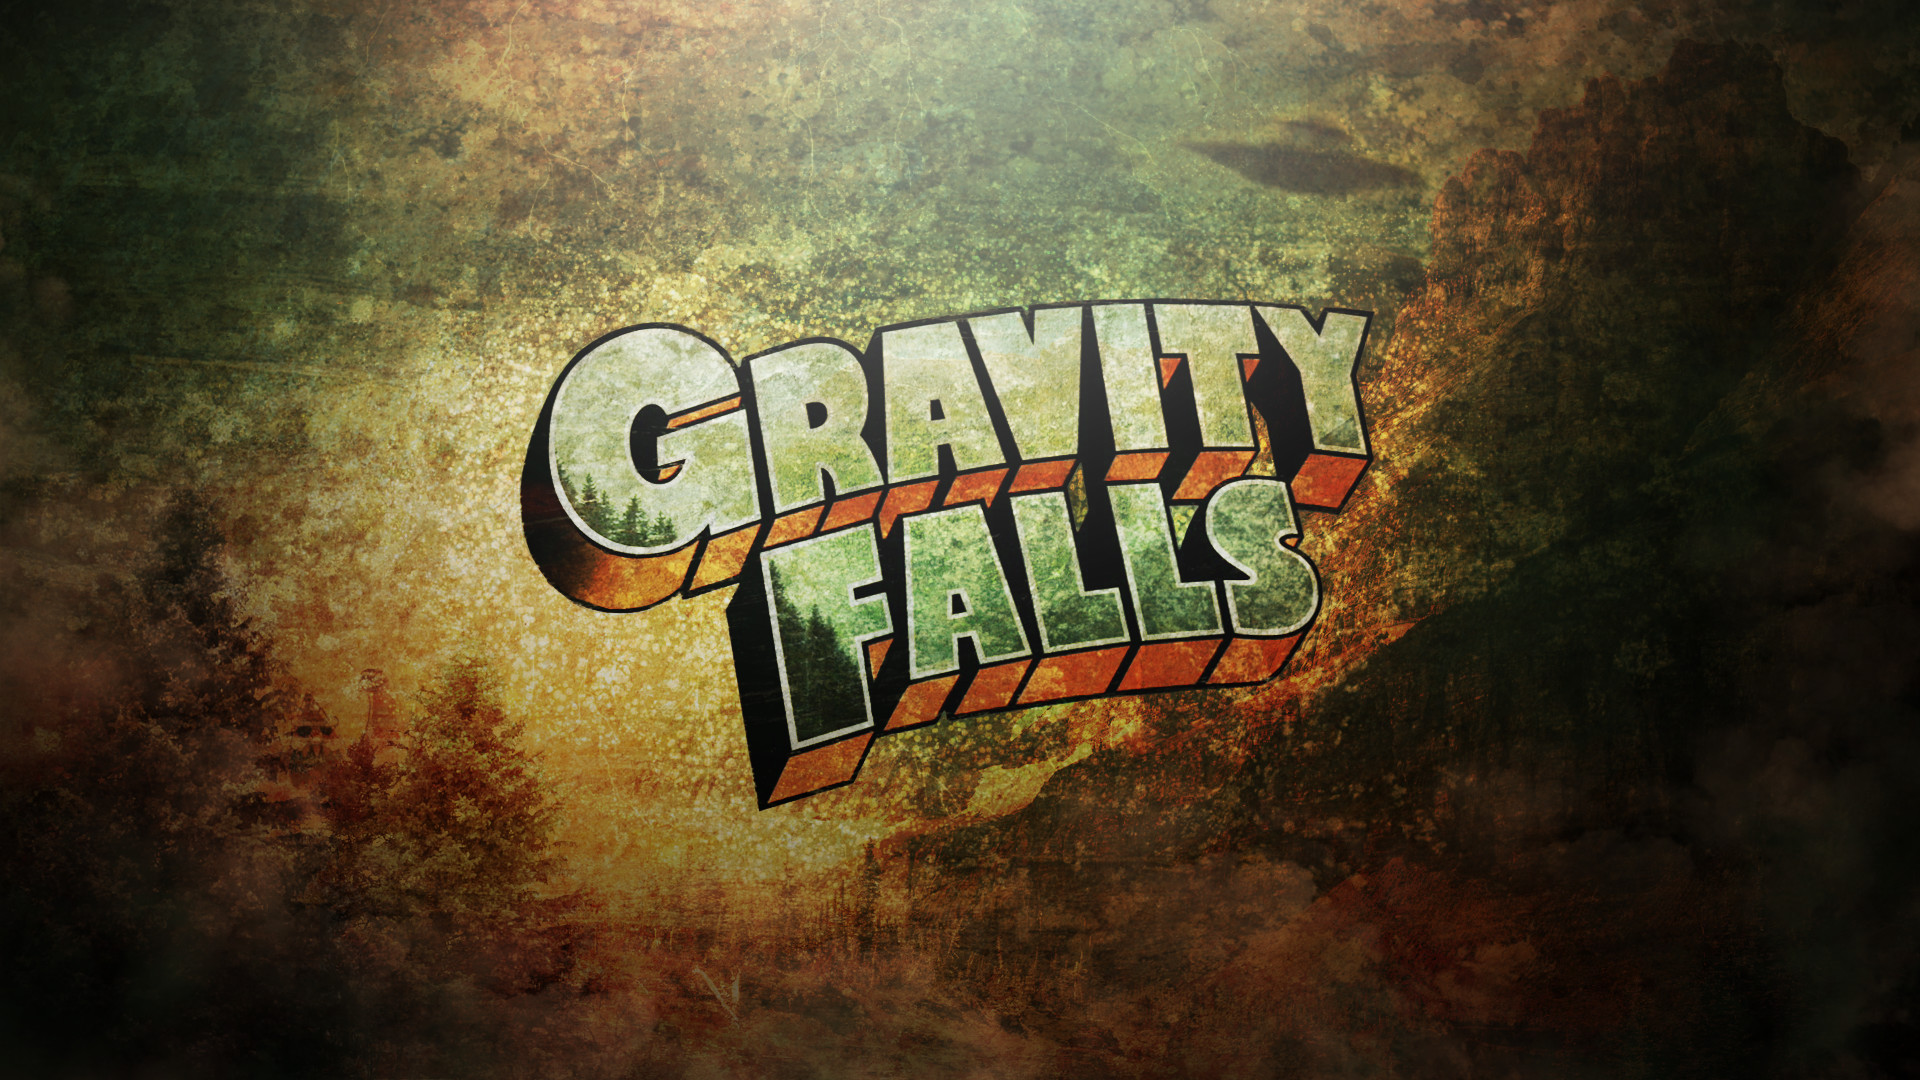 1920x1080 ( px) - Gravity Falls Wallpapers, Gertrude Johannes